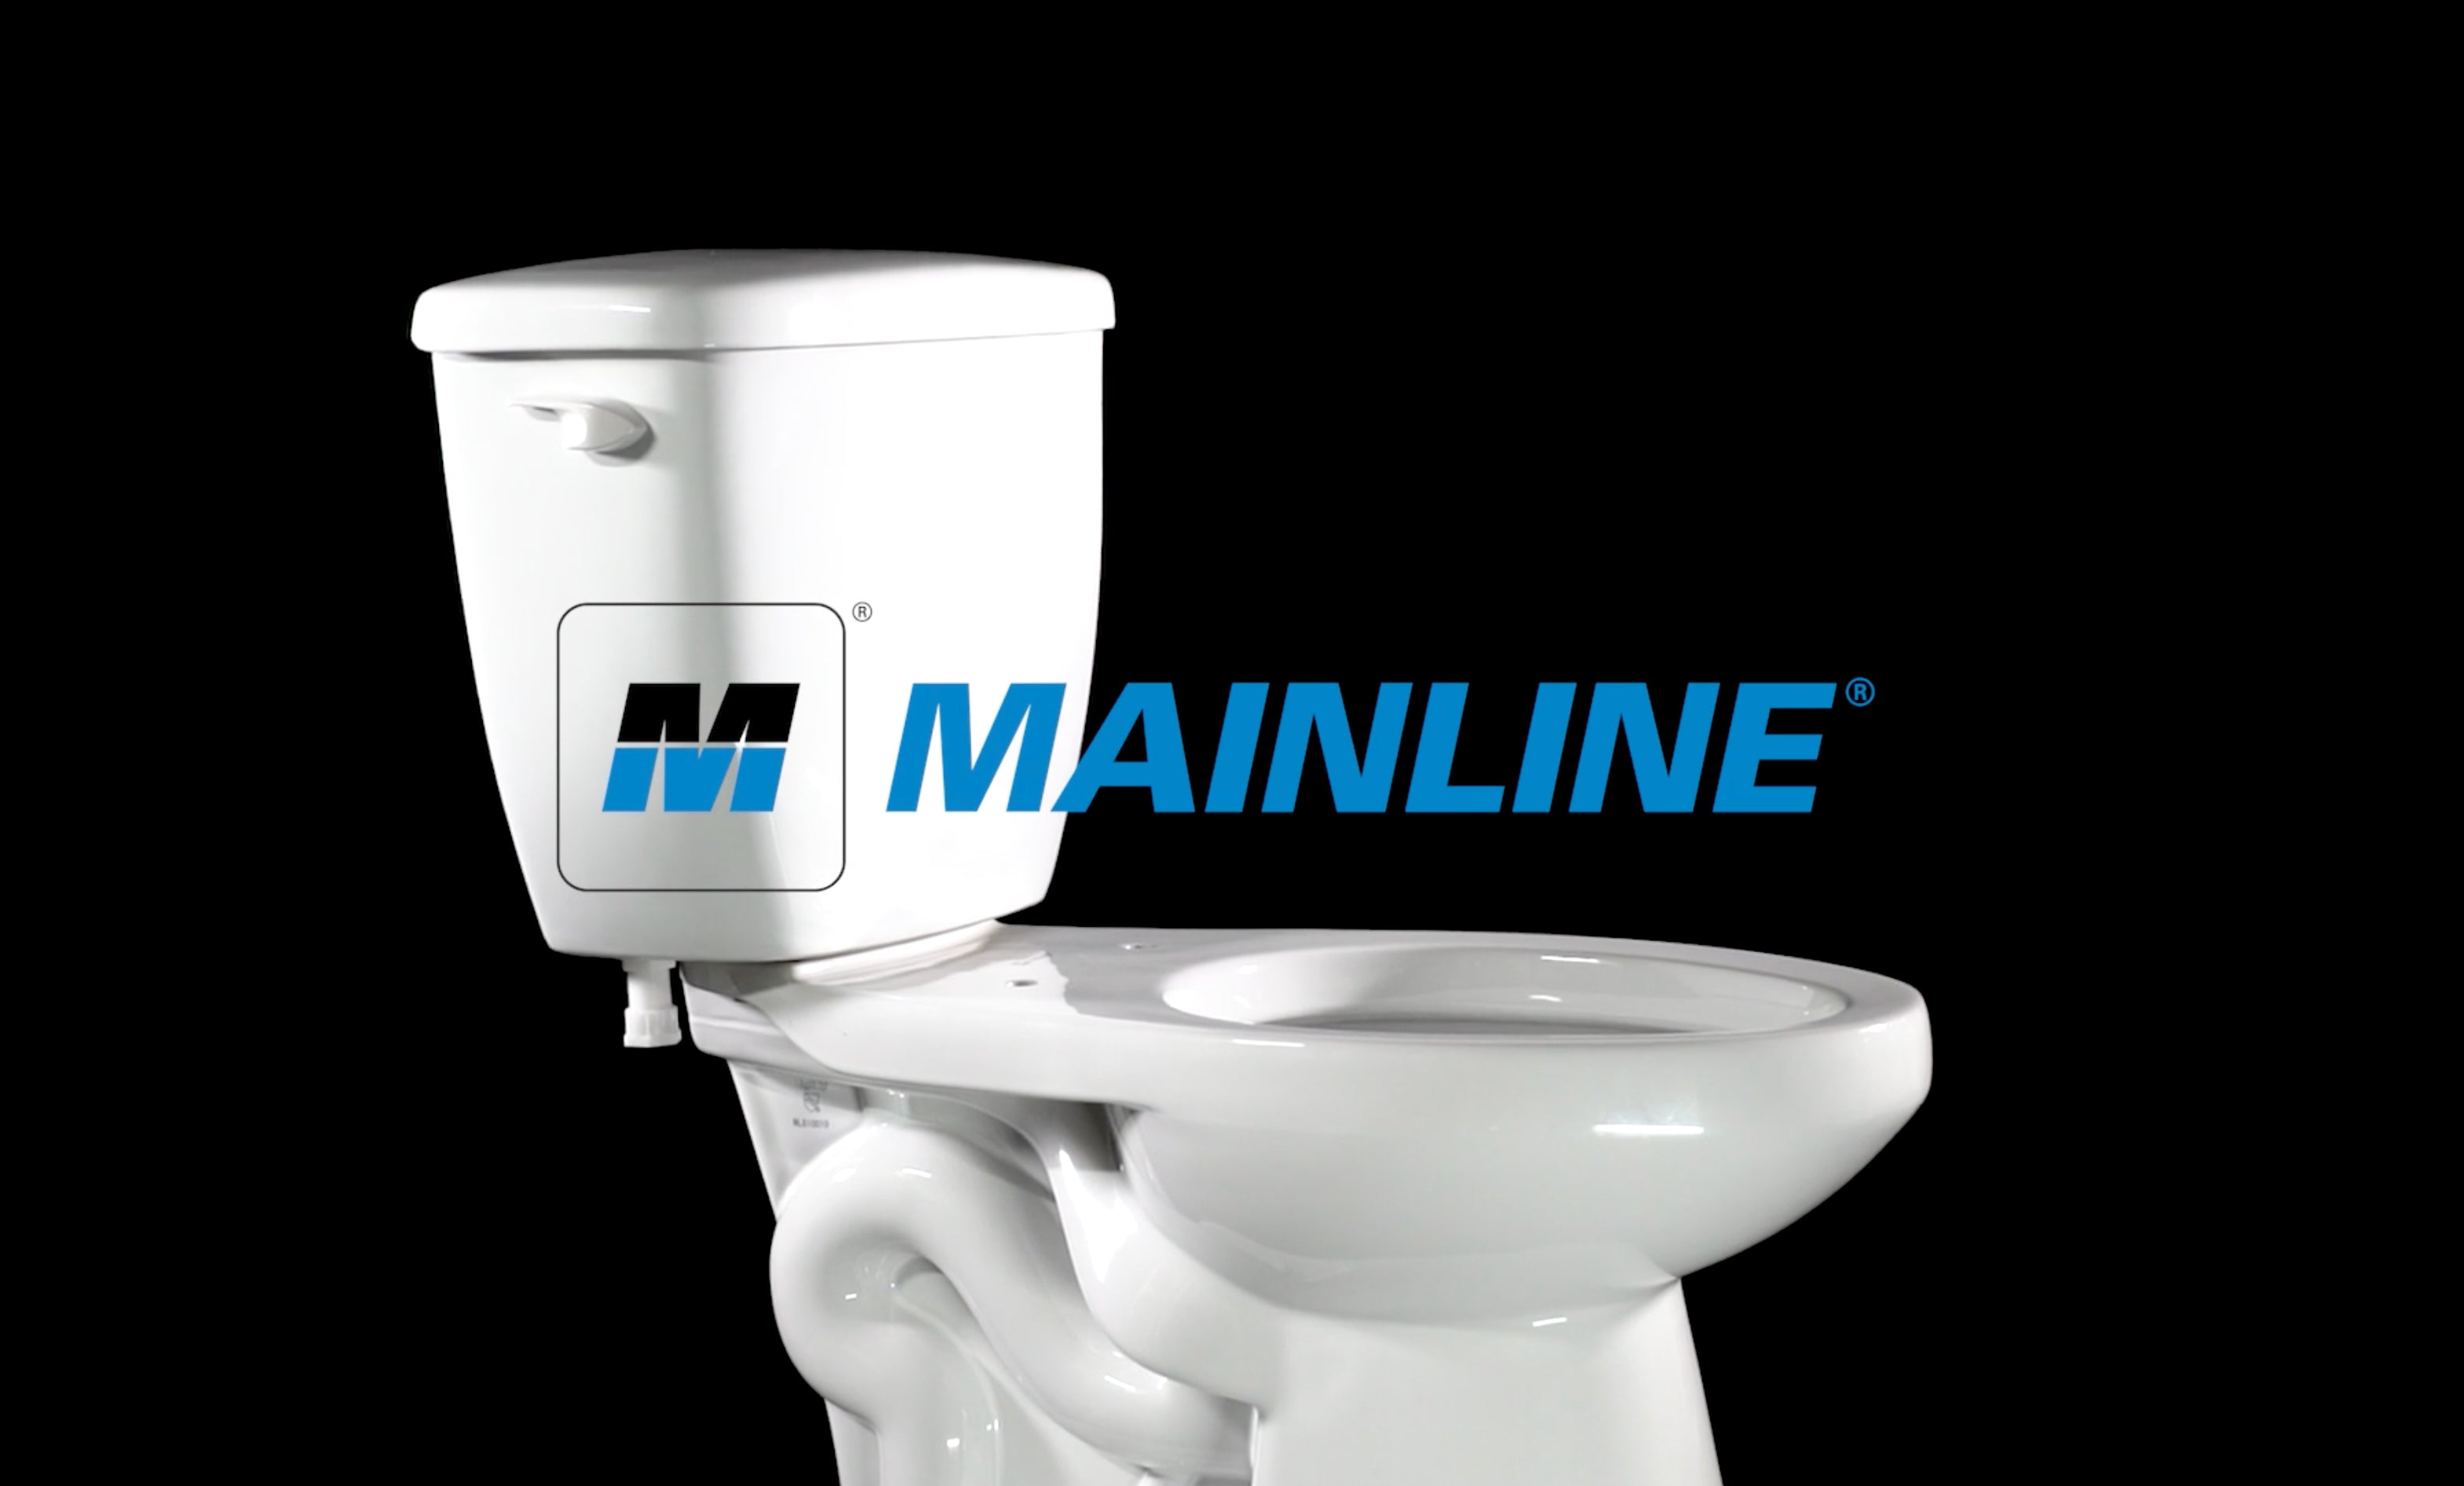 Mainline® Toilet pop-up video